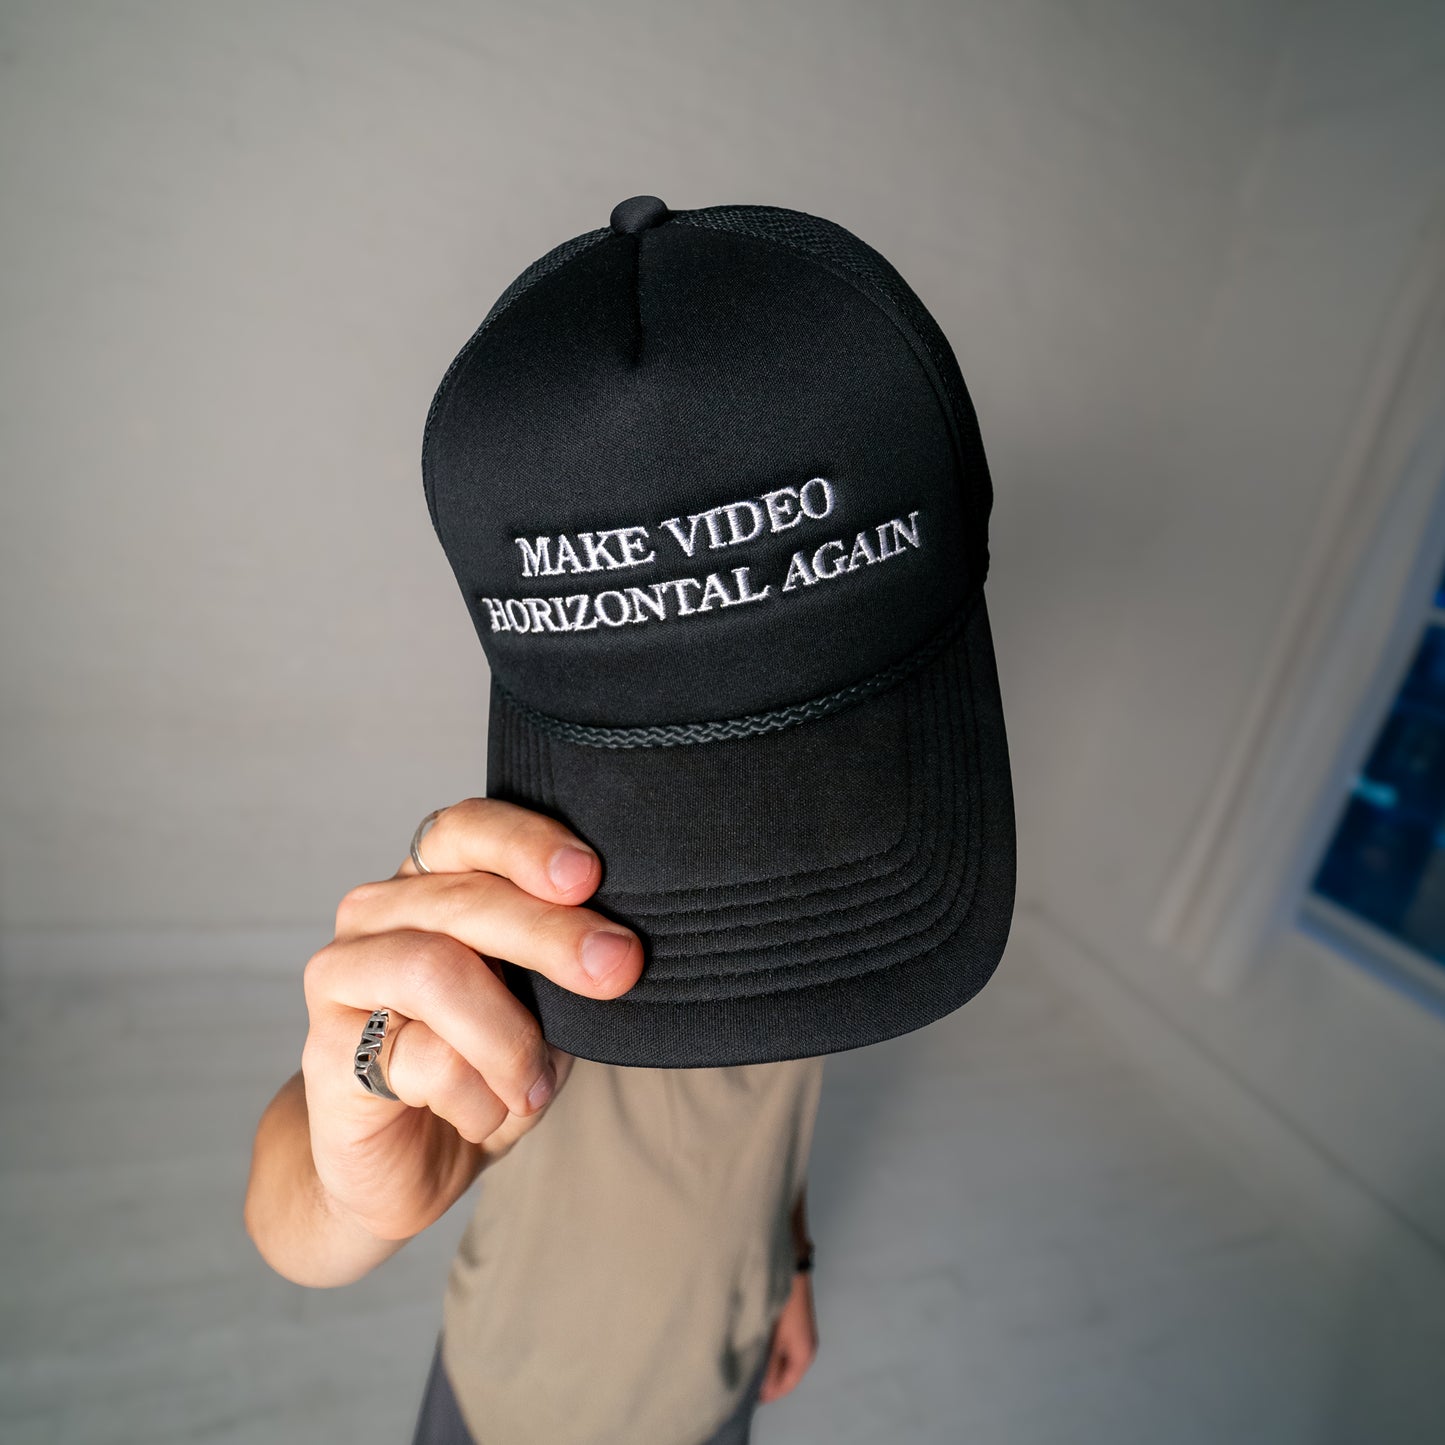 "Make Video Horizontal Again" - Trucker Hat